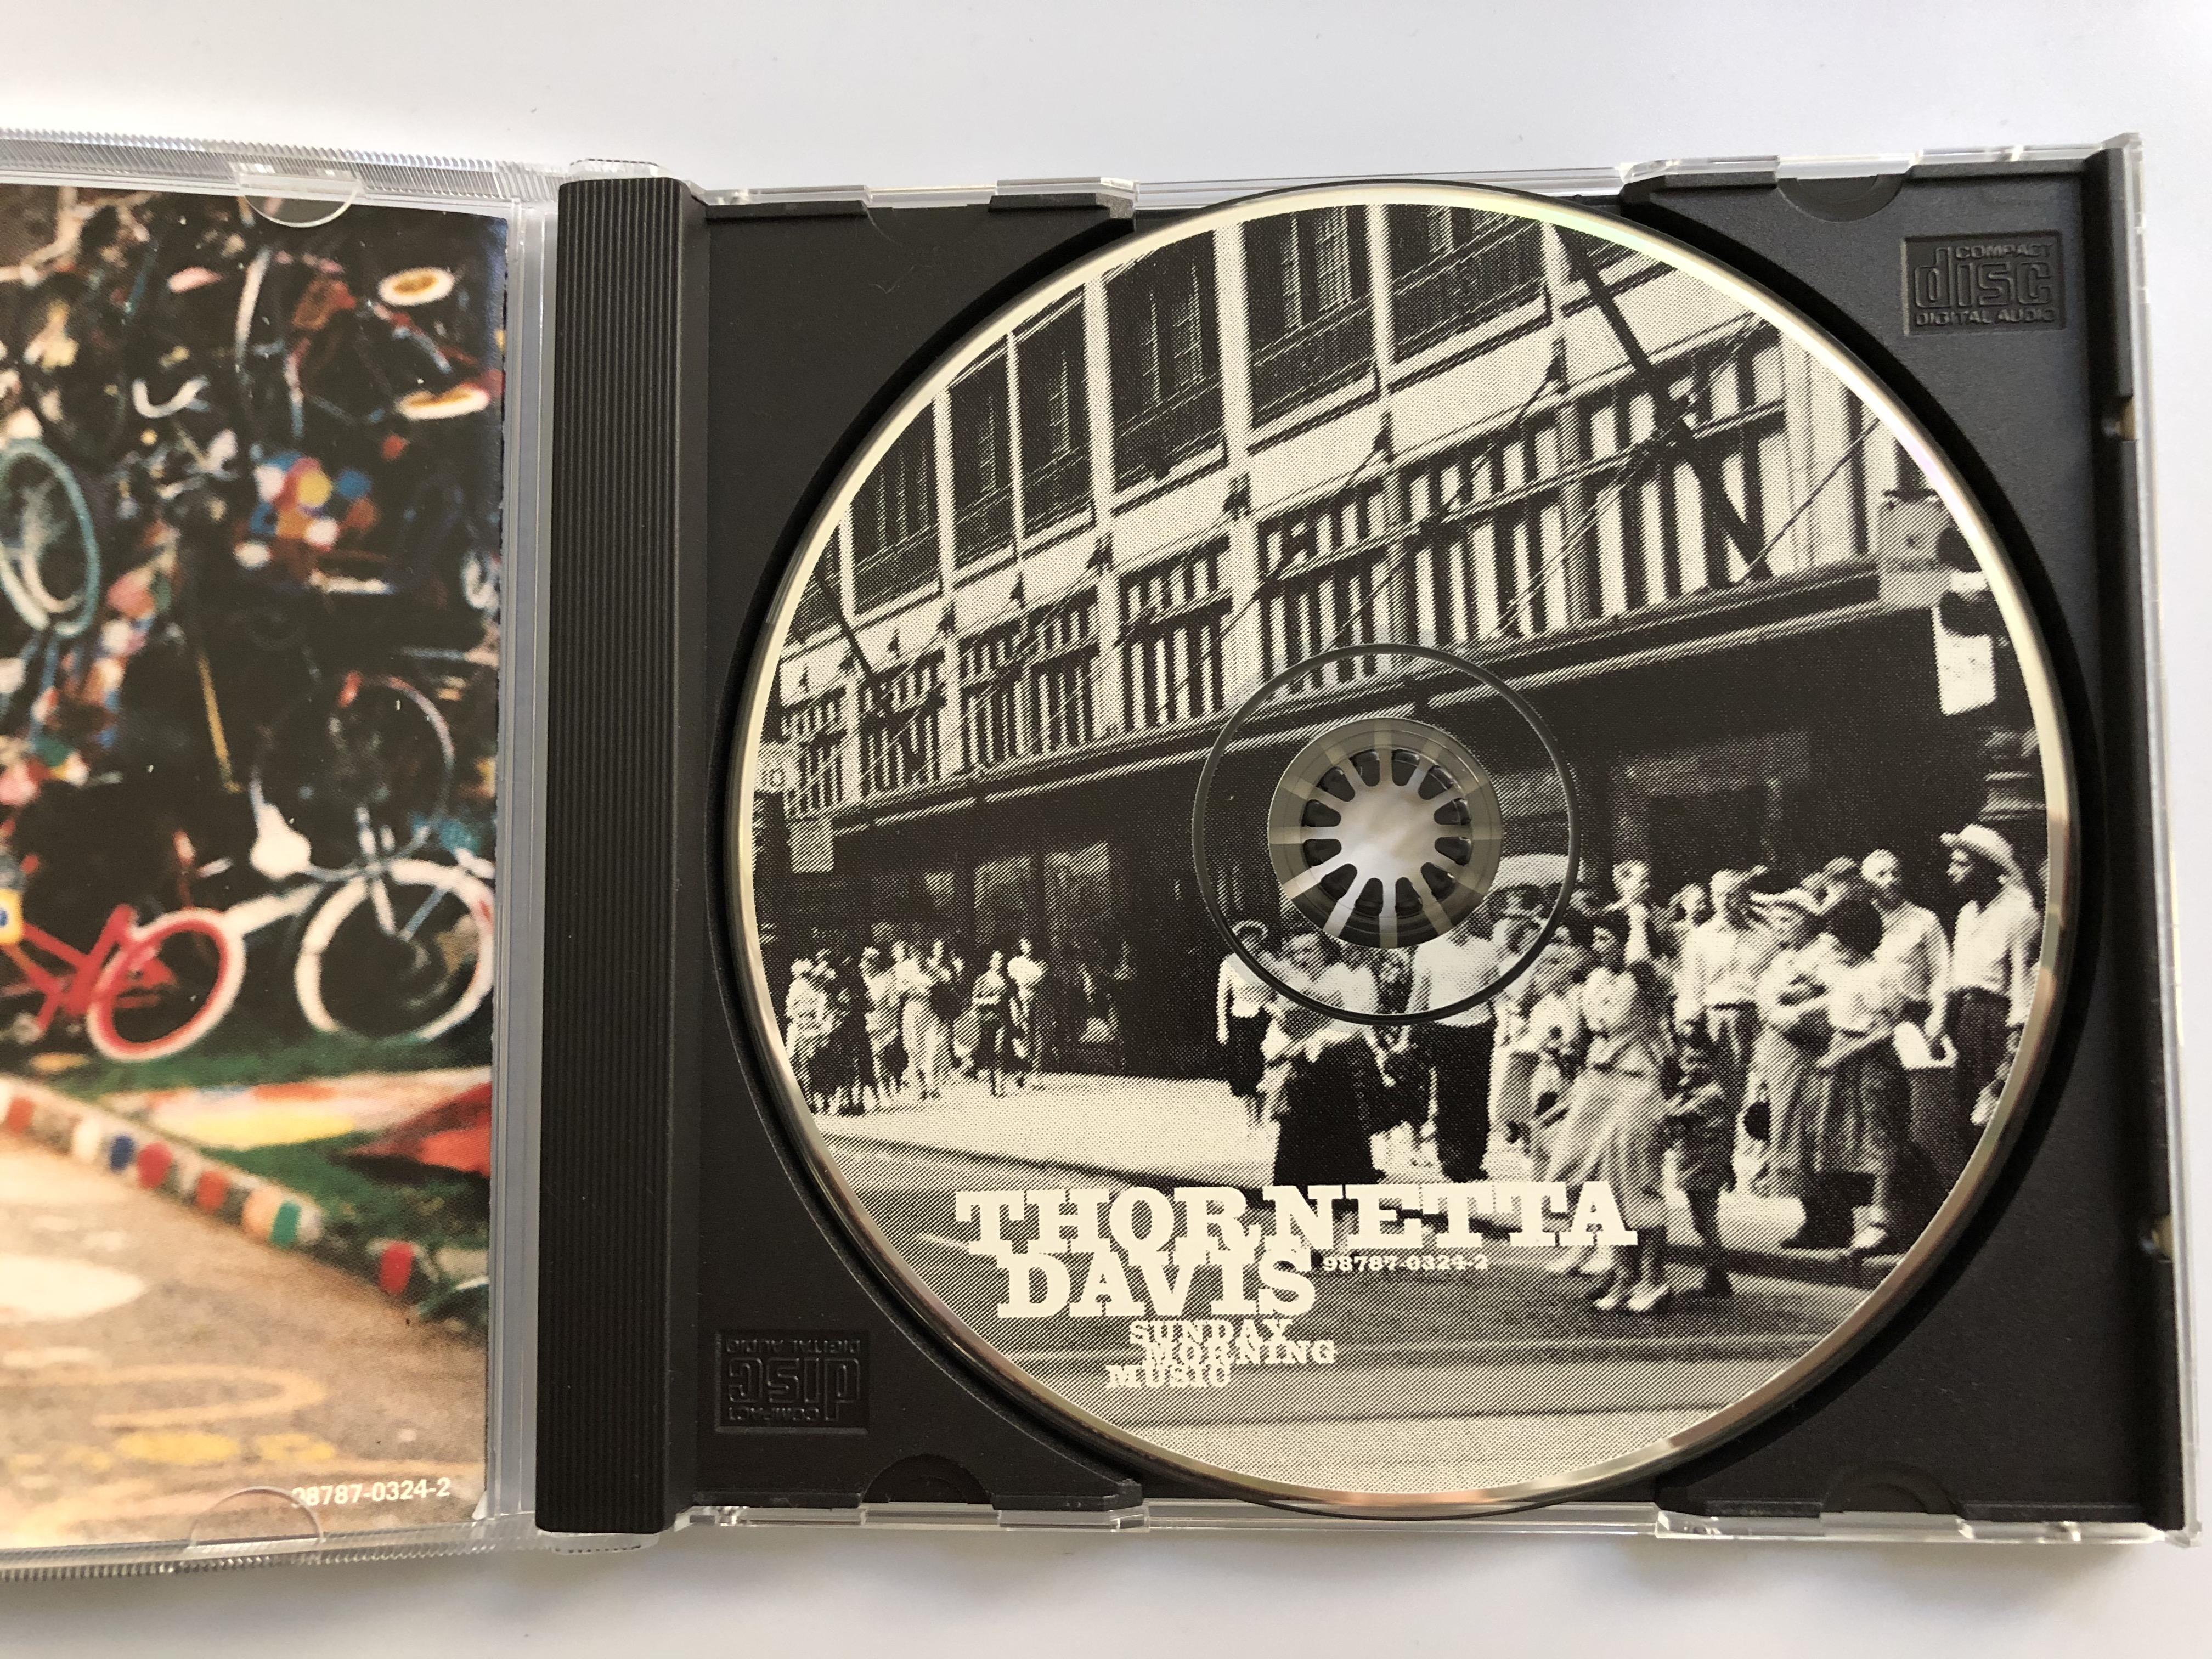 thornetta-davis-sunday-morning-music-sub-pop-audio-cd-1996-spcd-324-5-.jpg